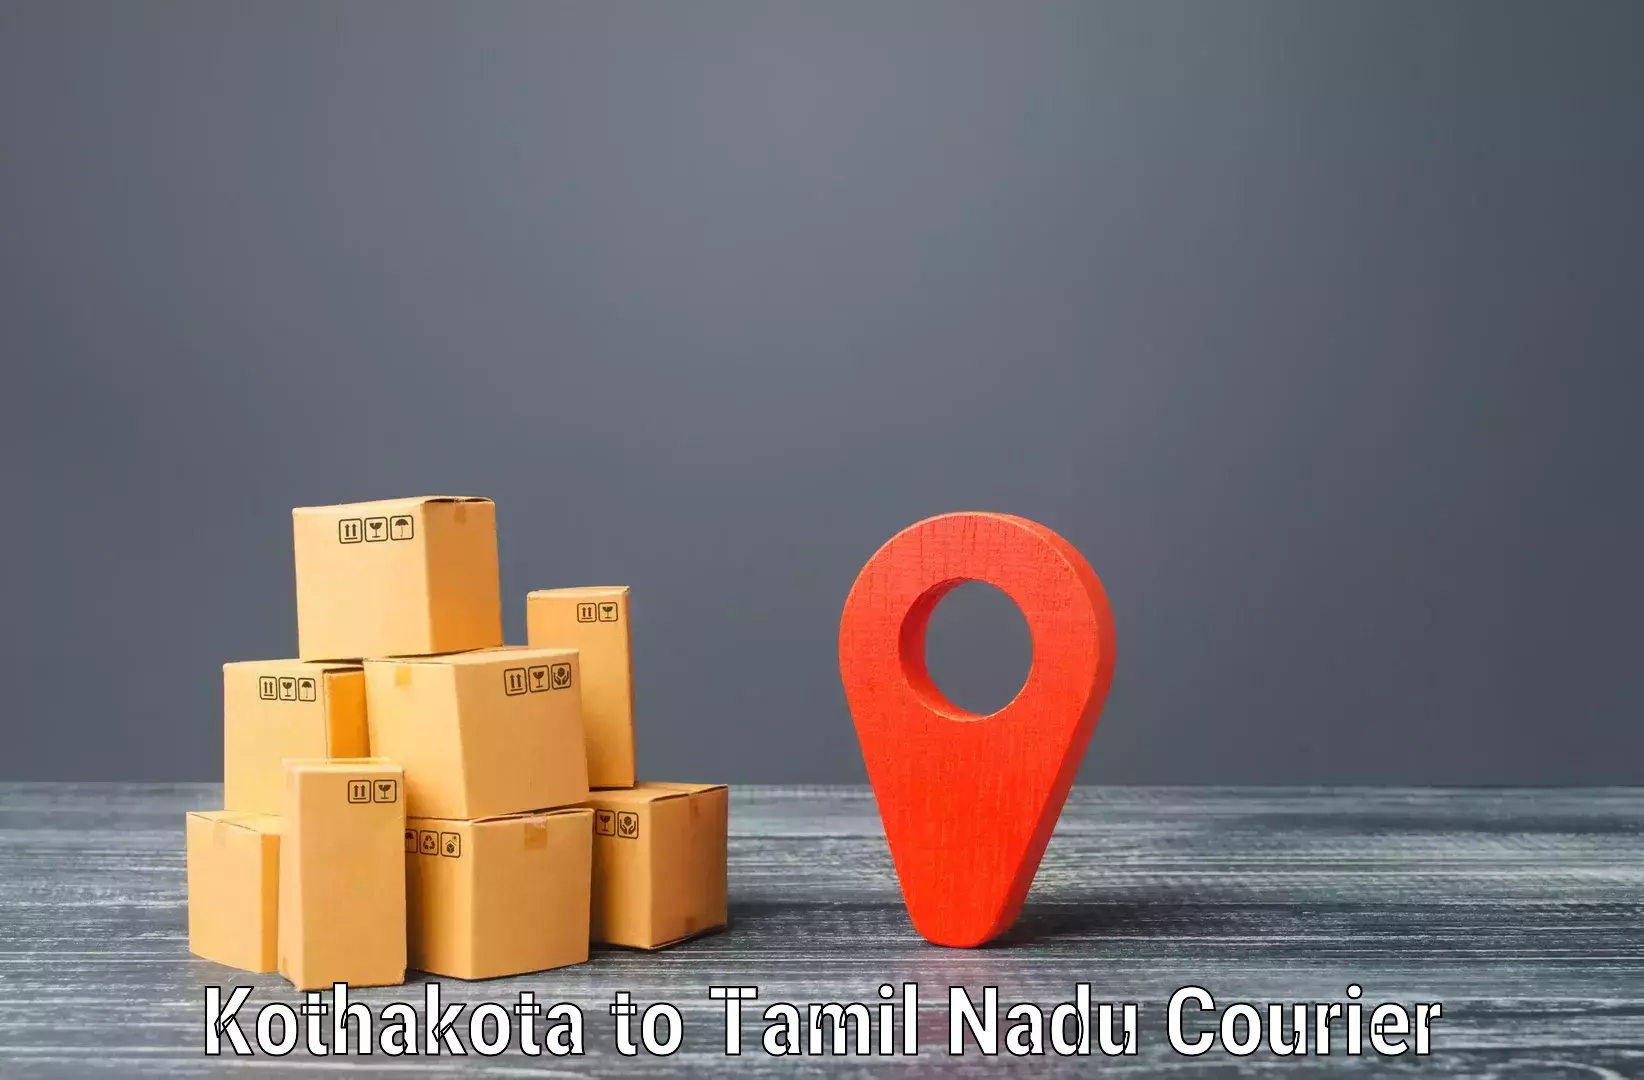 Logistics and distribution Kothakota to Kodumudi